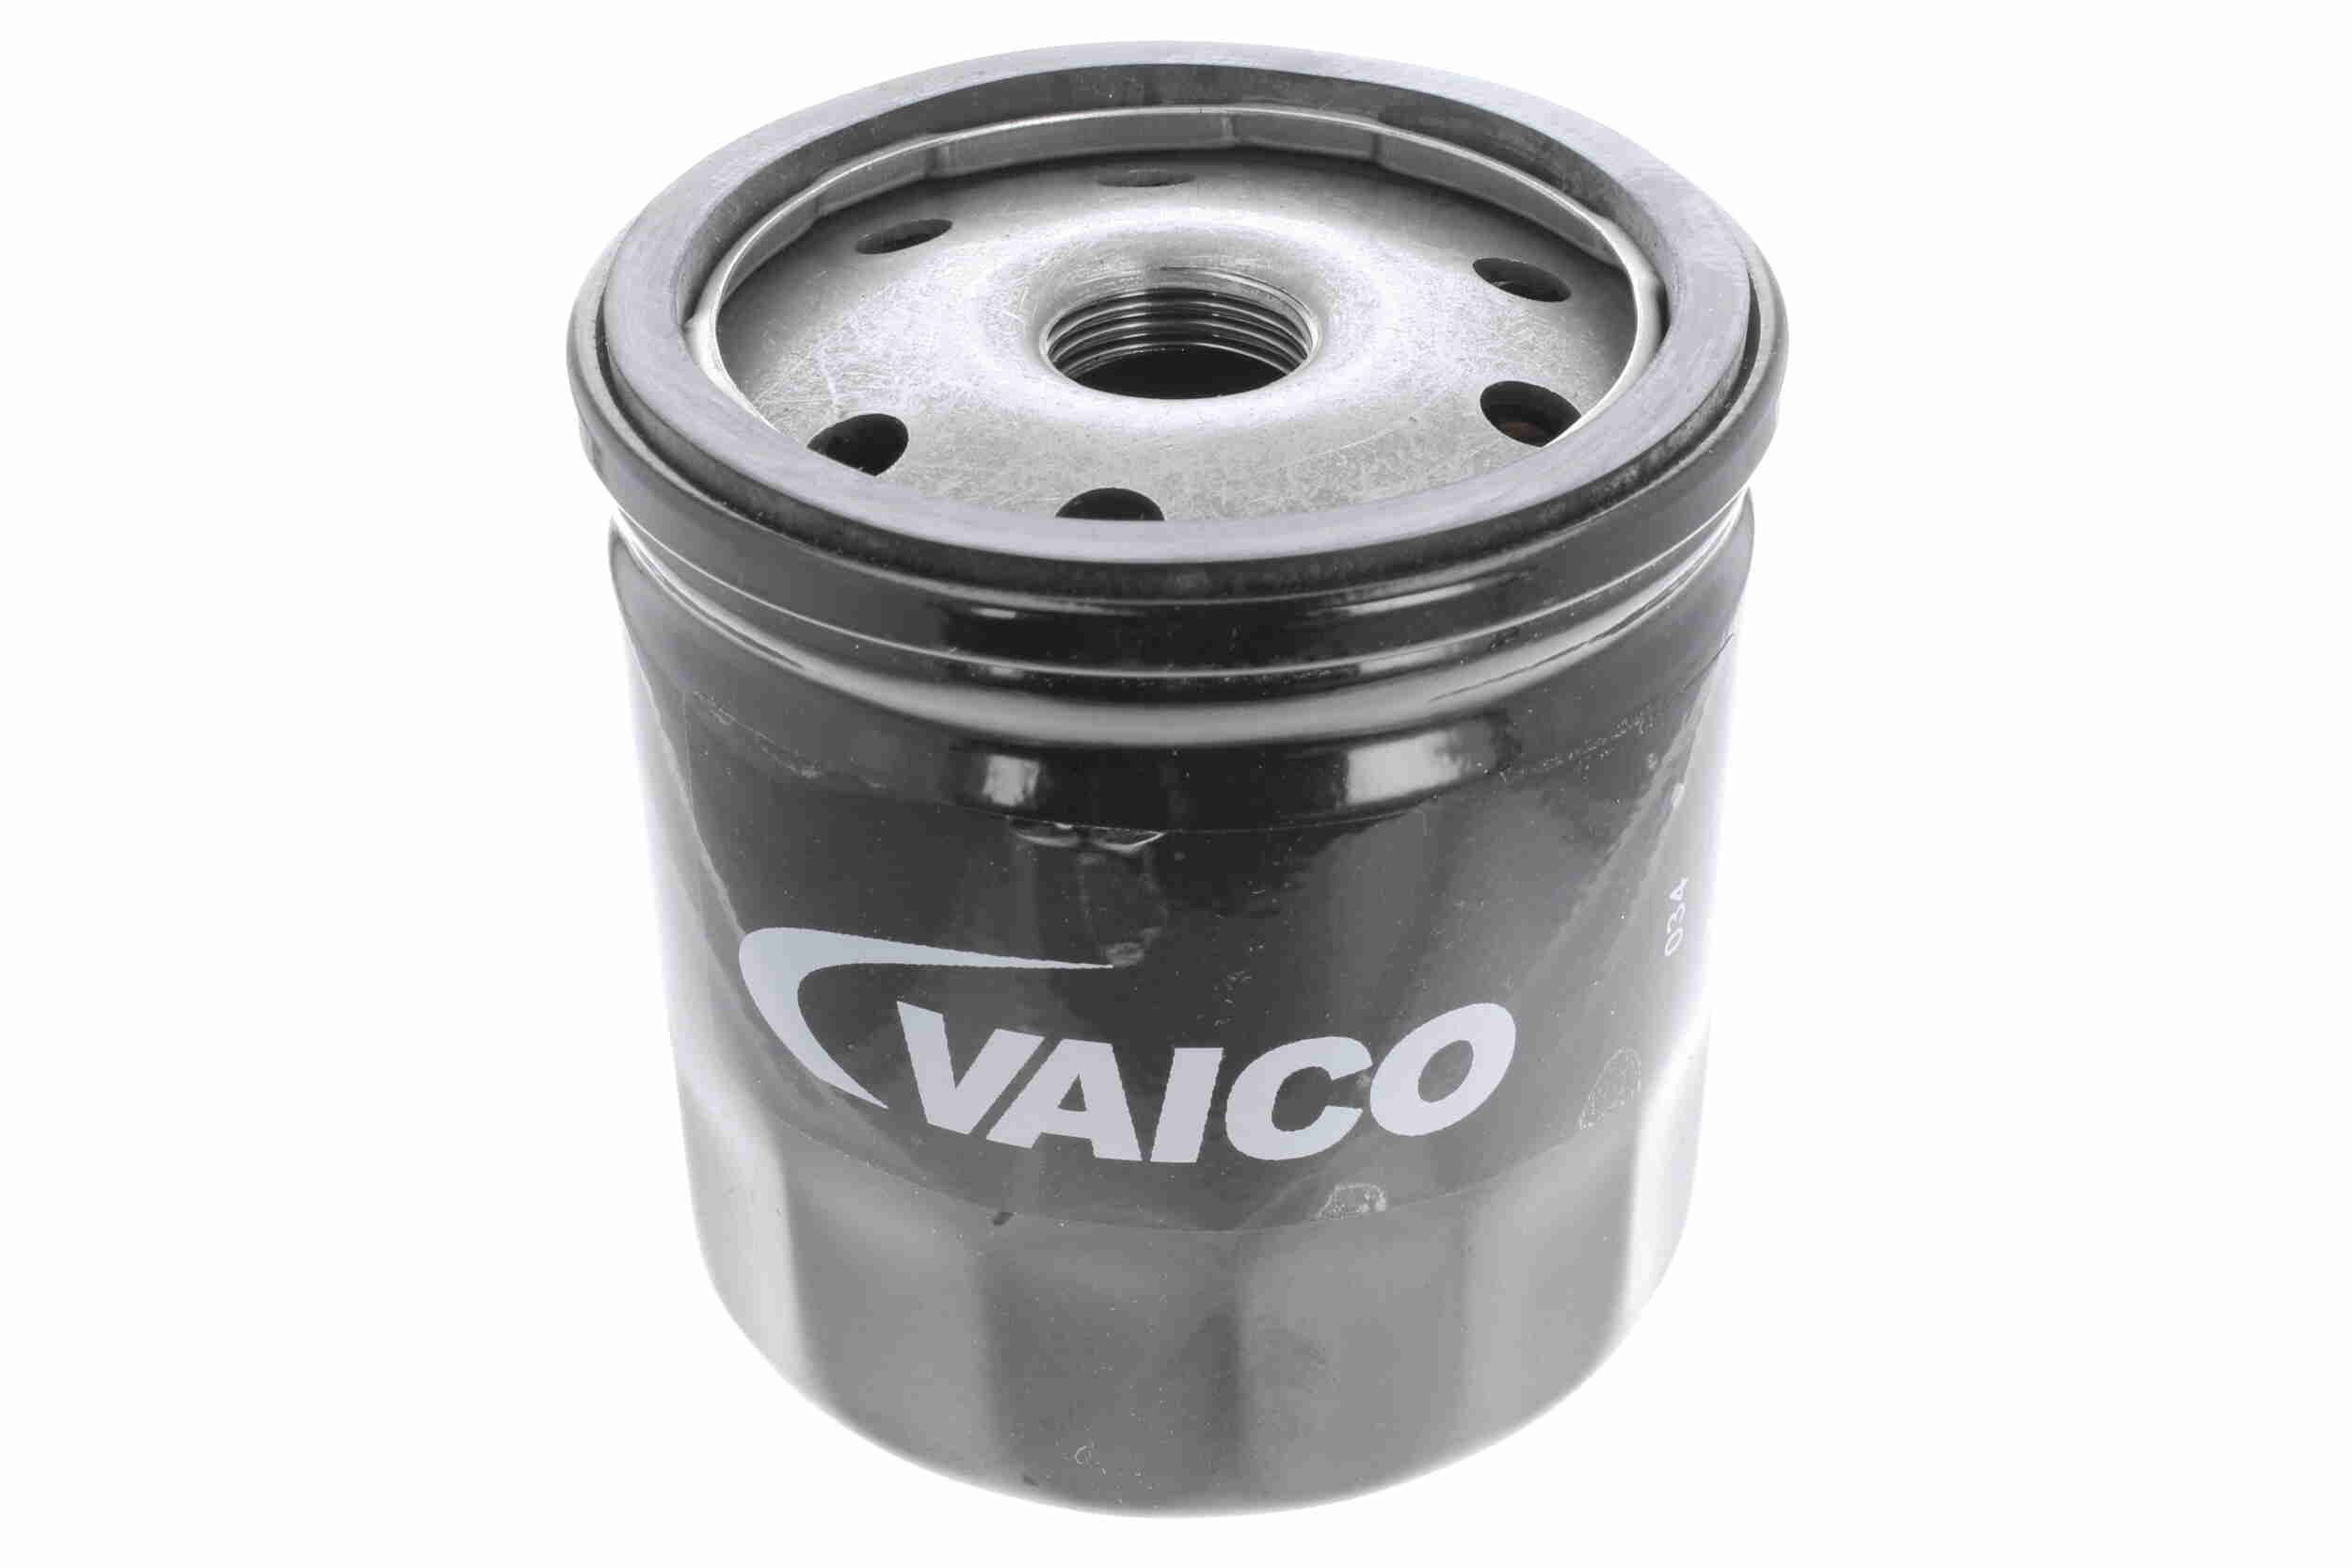 V40-0089 VAICO Anschraubfilter, Original VAICO Qualität Innendurchmesser 2: 62mm, Innendurchmesser 2: 71mm, Ø: 76mm, Ø: 76mm, Höhe: 79mm Ölfilter V40-0089 günstig kaufen